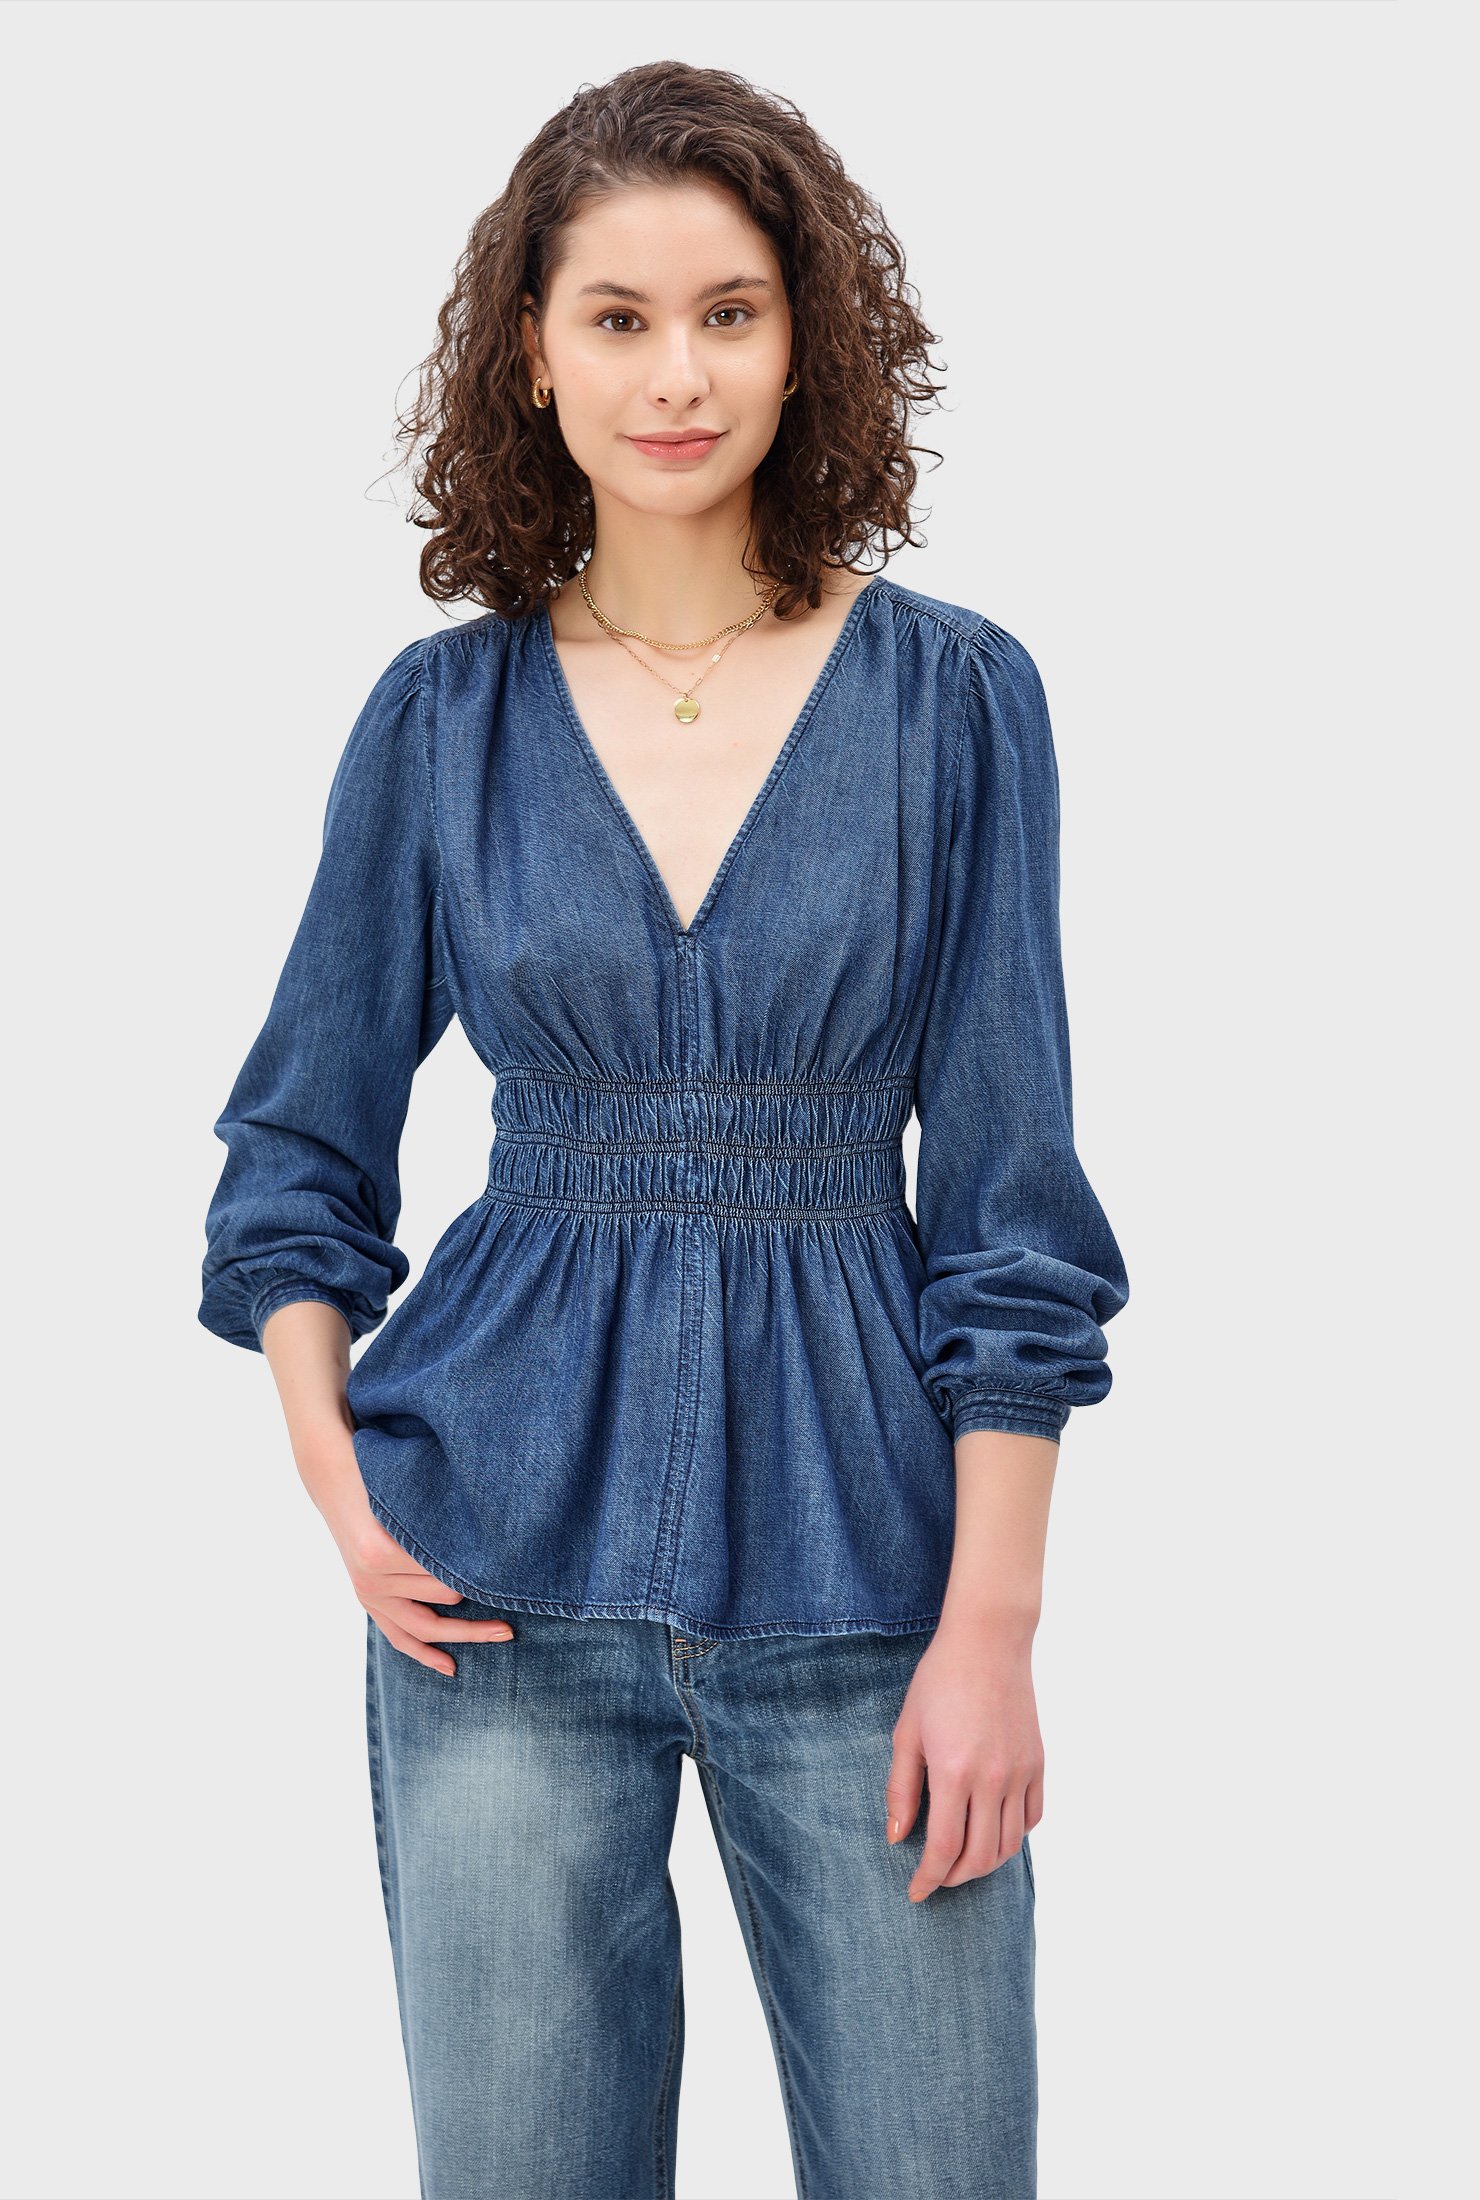 Lands' End Women's Plus Size Short Sleeve Cotton Poplin Pajama Shirt - 2x -  Medium Indigo Chambray